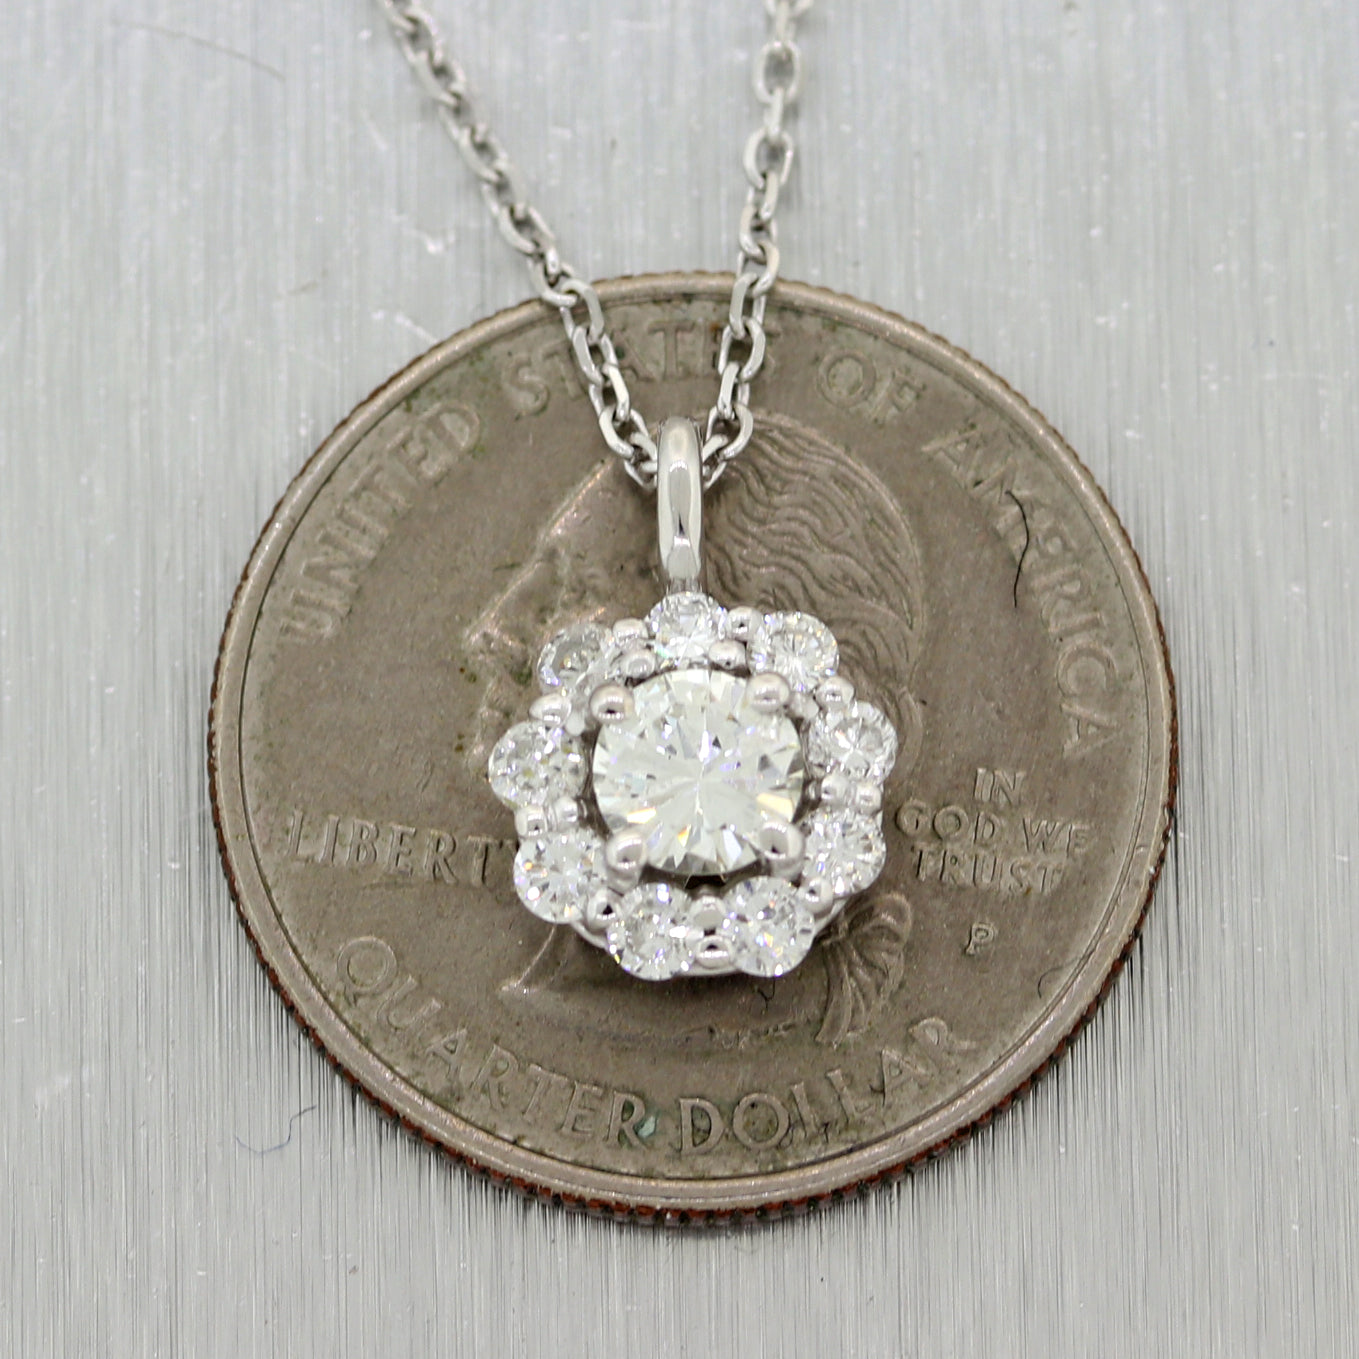 Modern 14k White Gold 0.95ctw Diamond Cluster Flower 18" Necklace